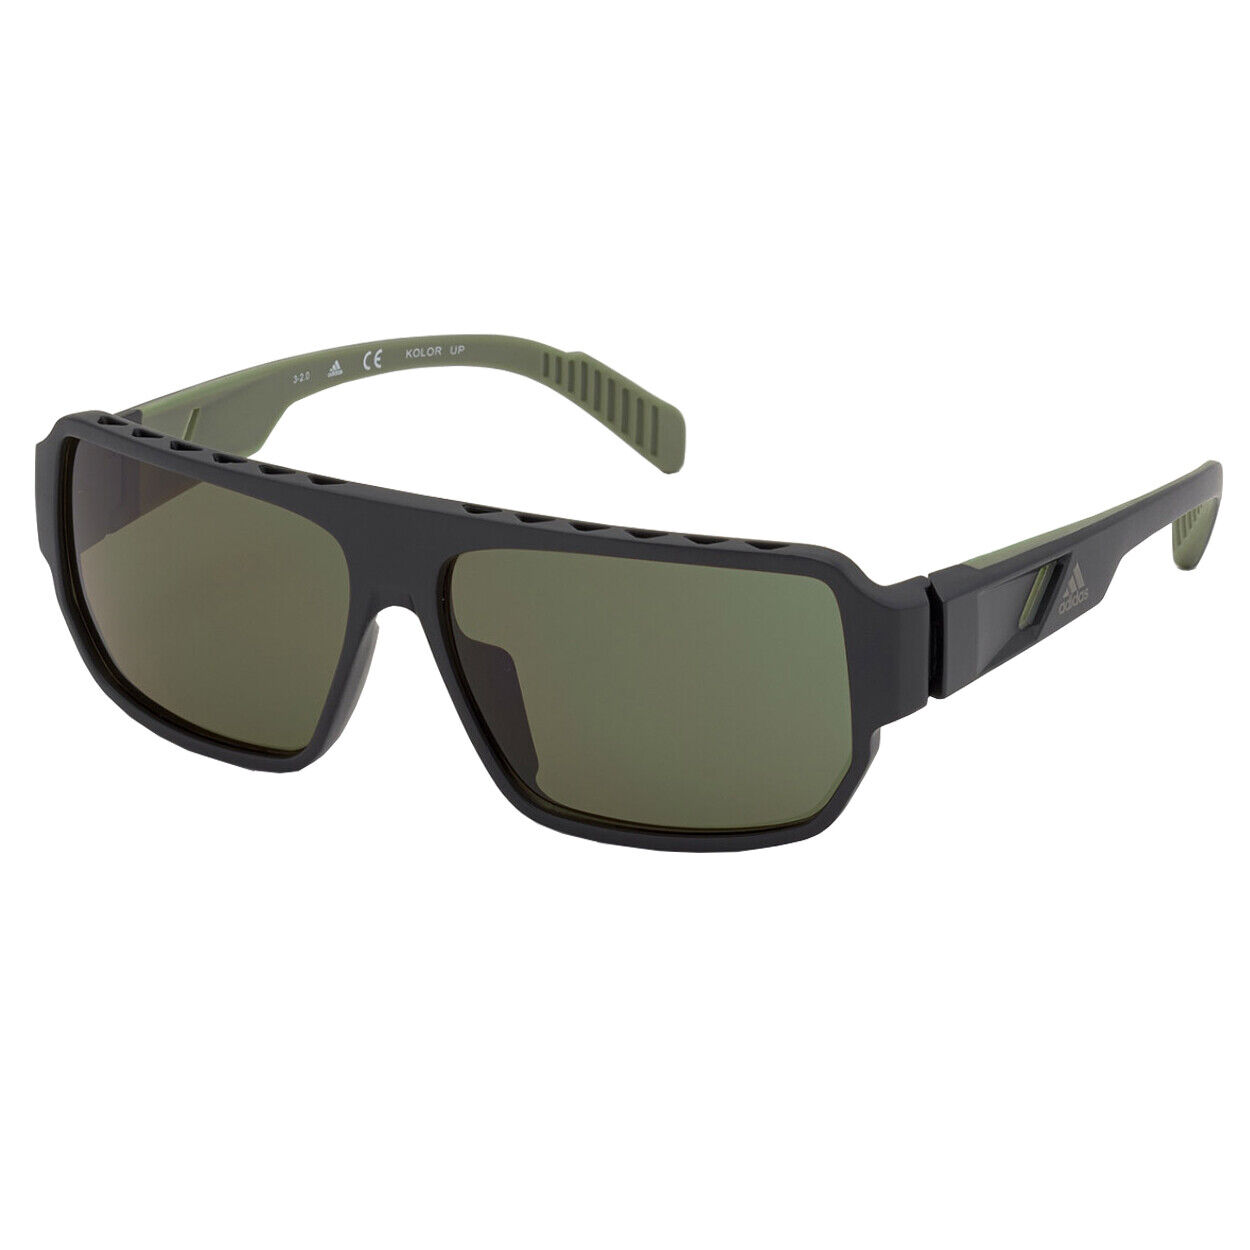 Adidas Golf Men's Sp0038 Full Rim Sport Sunglasses, Brand New